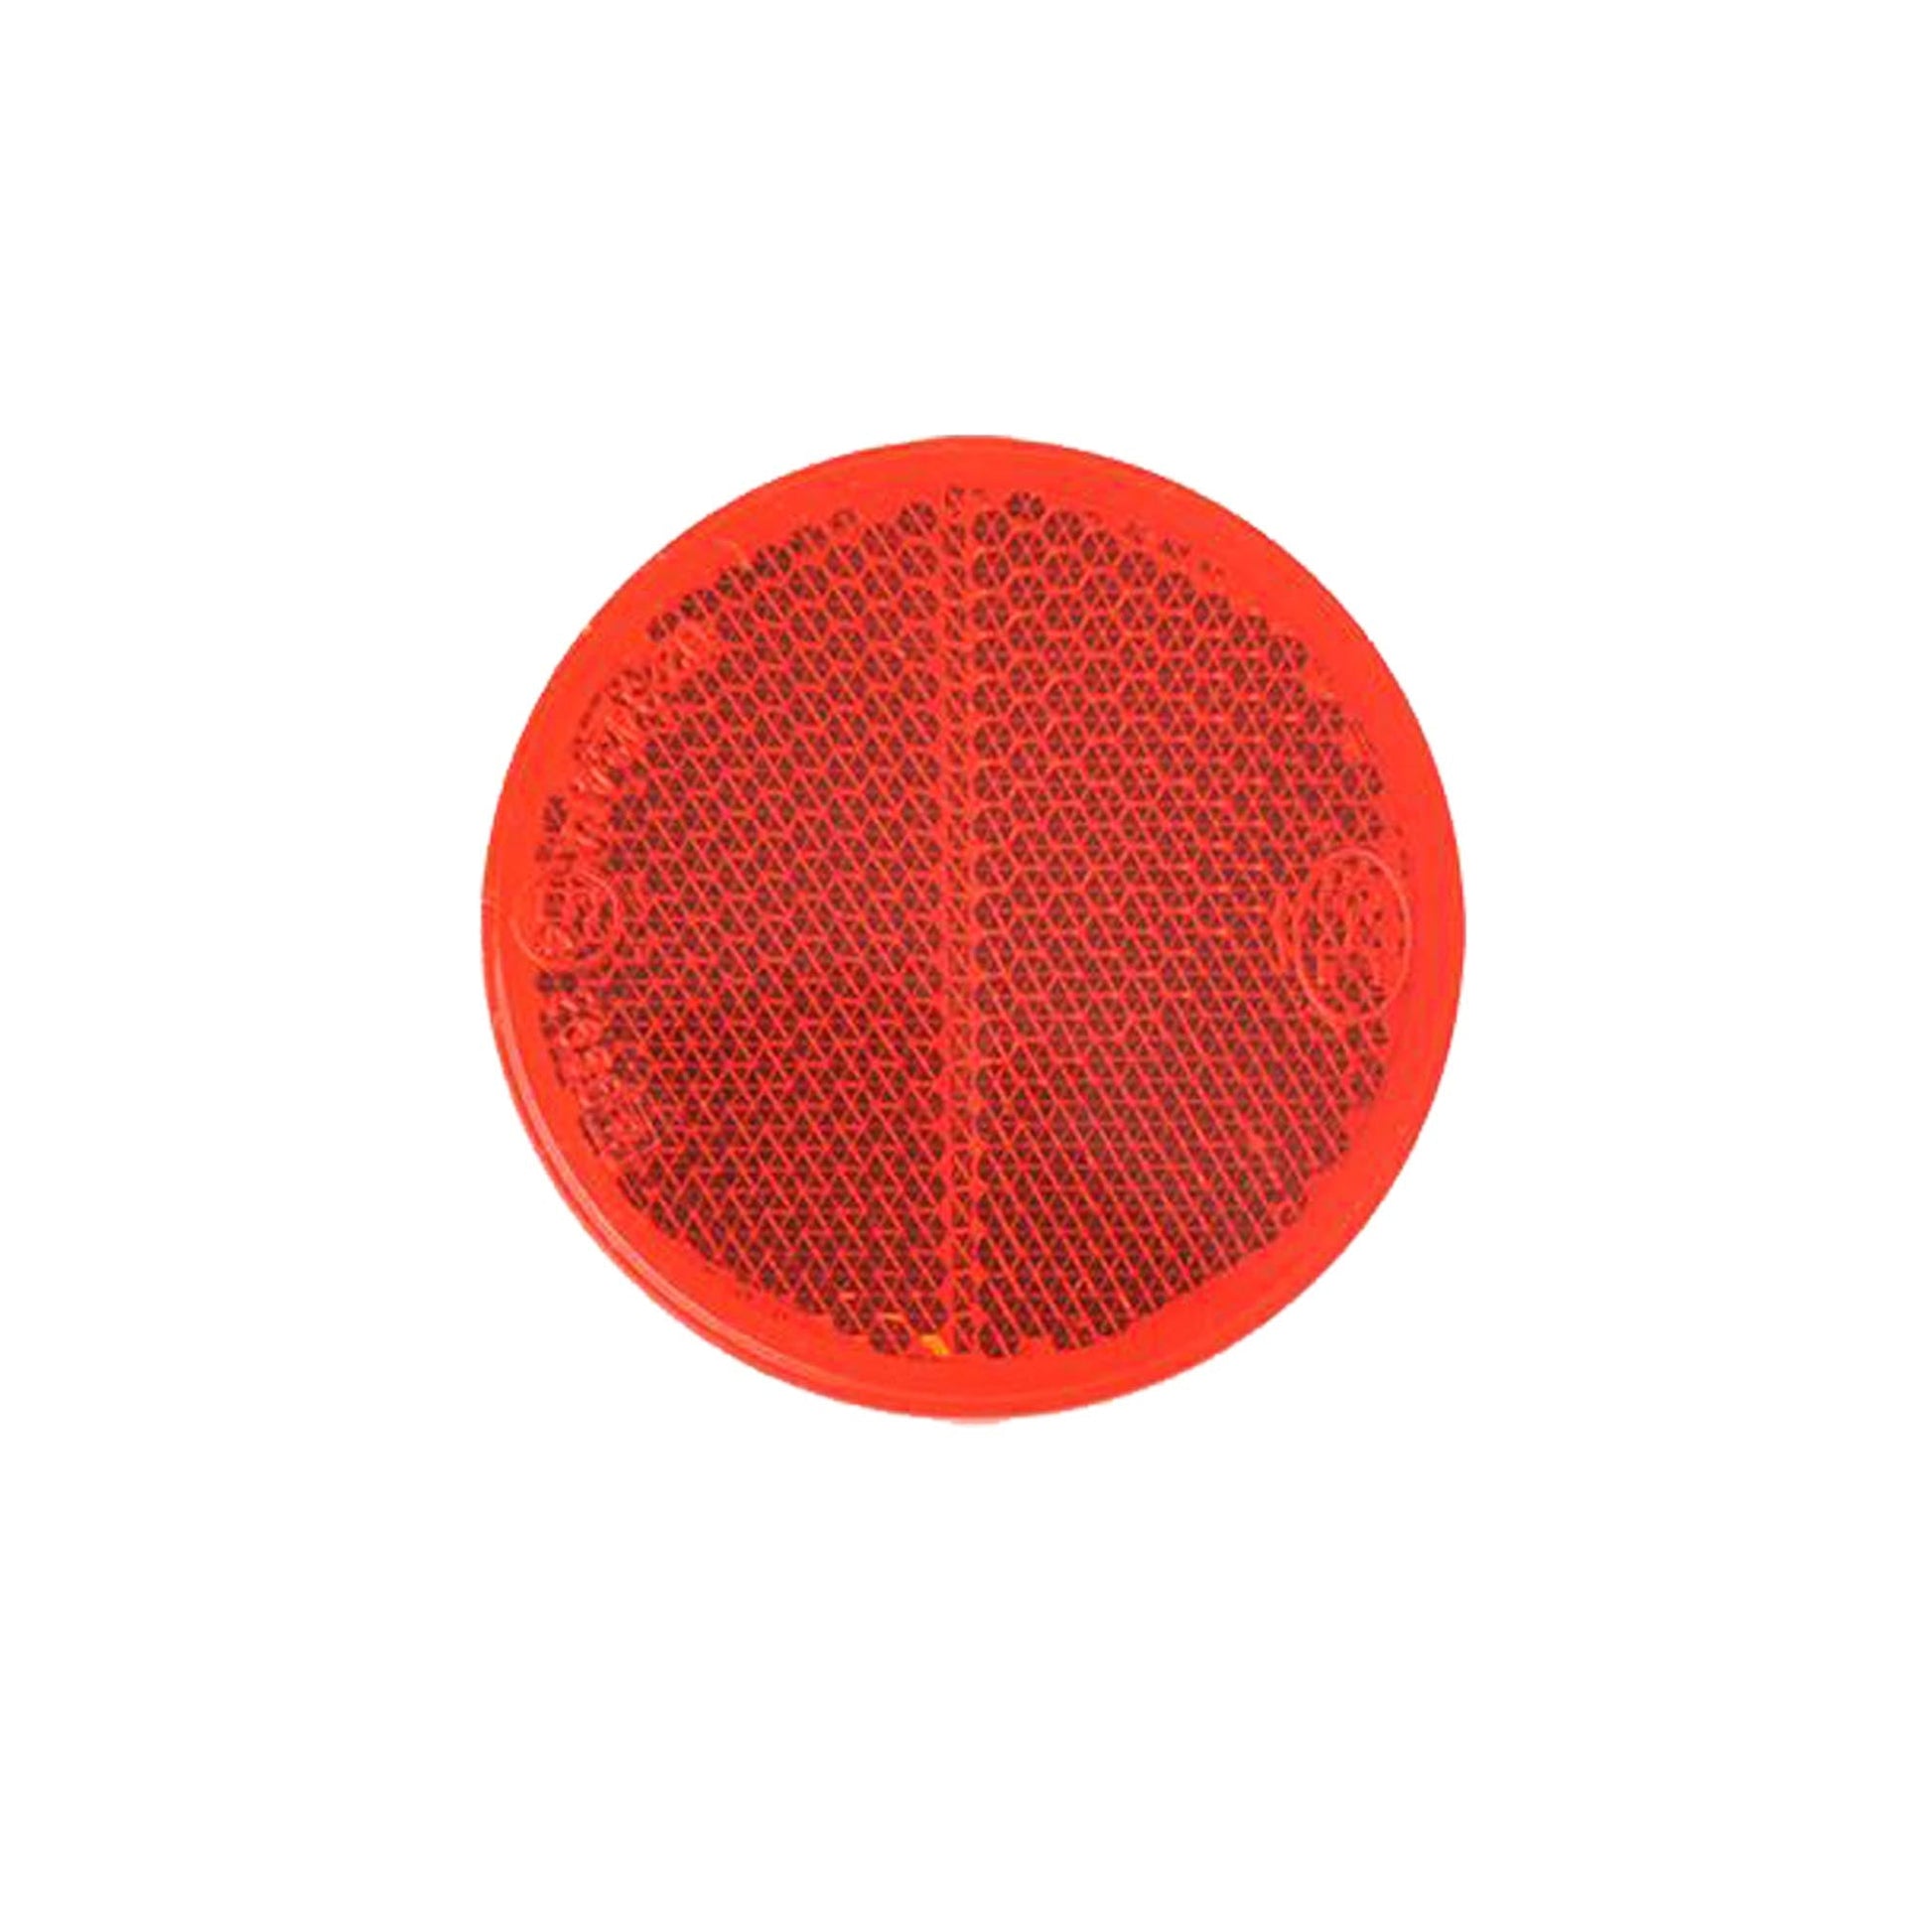 Reflektor rot Ø 60mm selbstklebend 